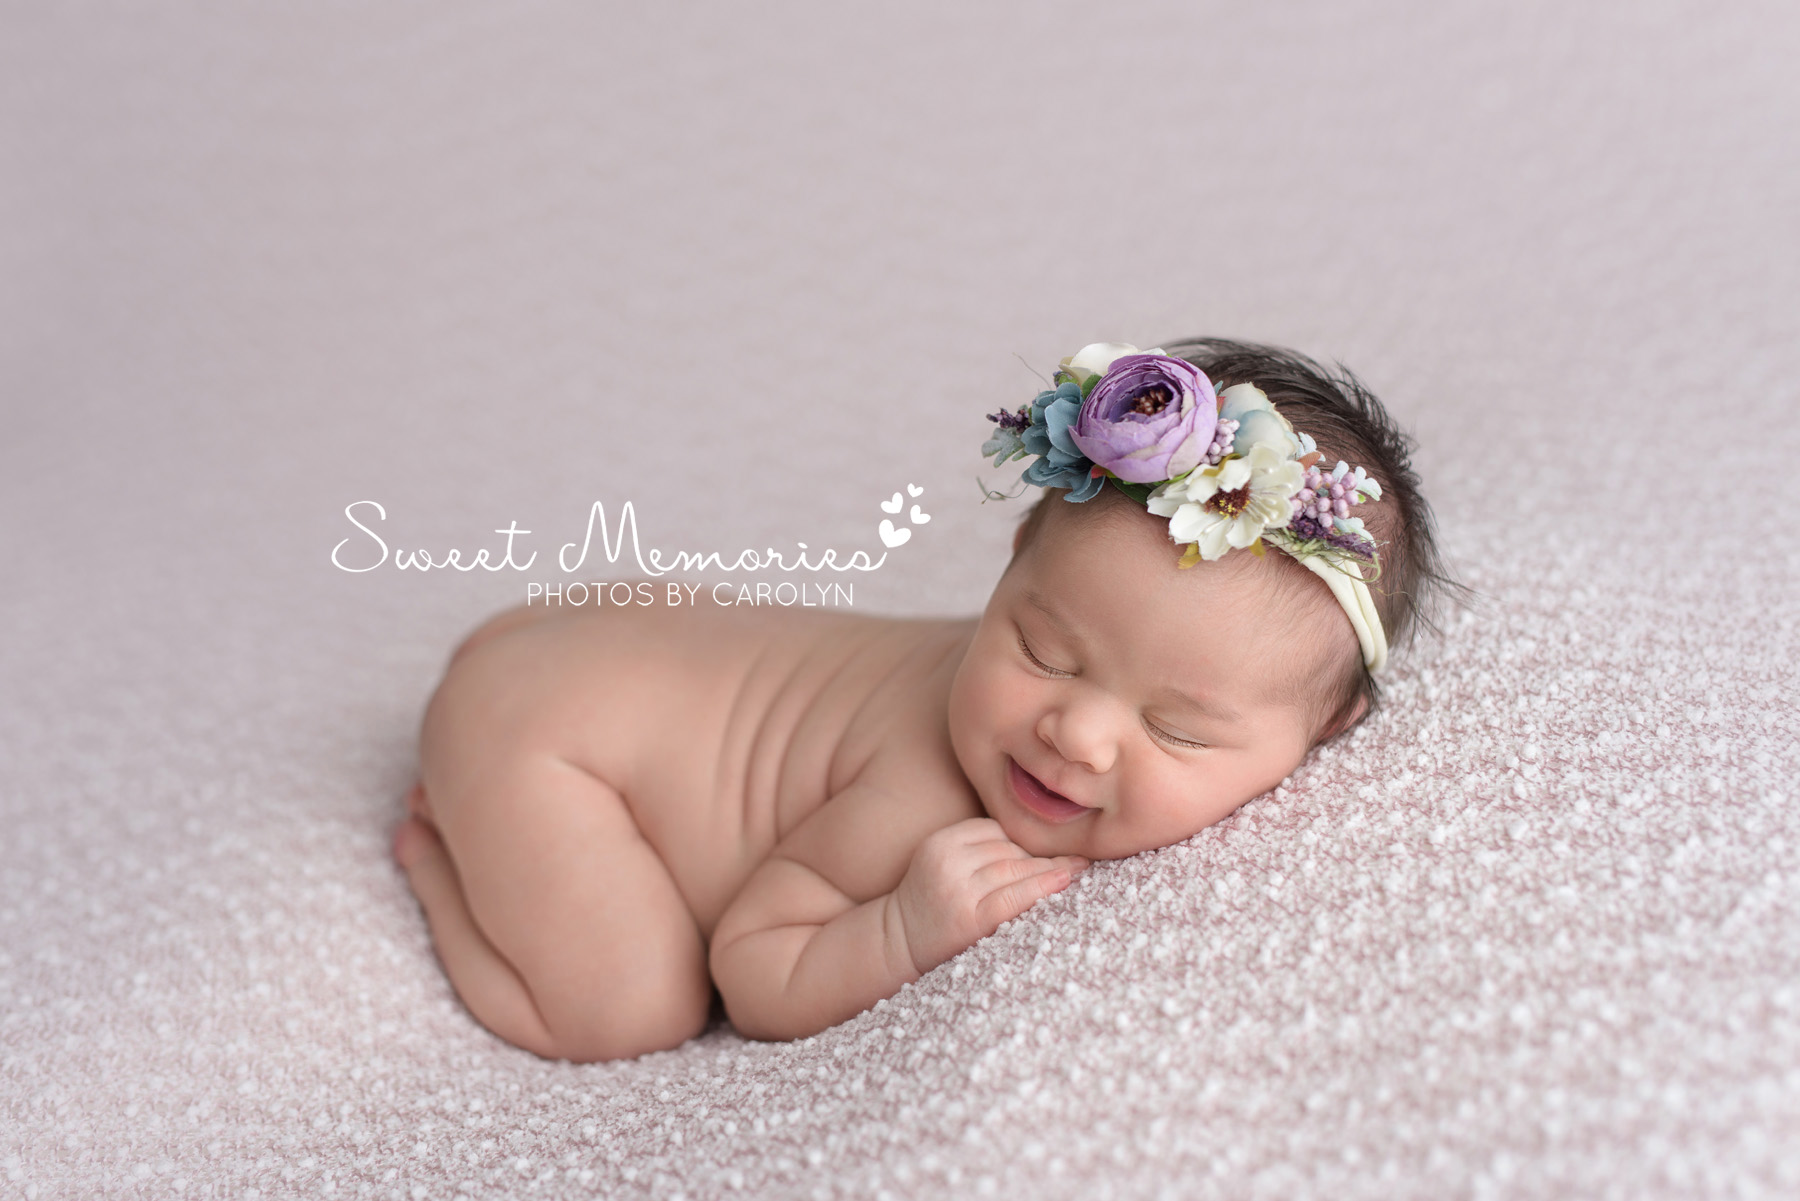 smiling newborn baby bum up pose with flower headband | Coopersburg newborn photographer | Sweet Memories Photos by Carolyn Quakertown Pennsylvania